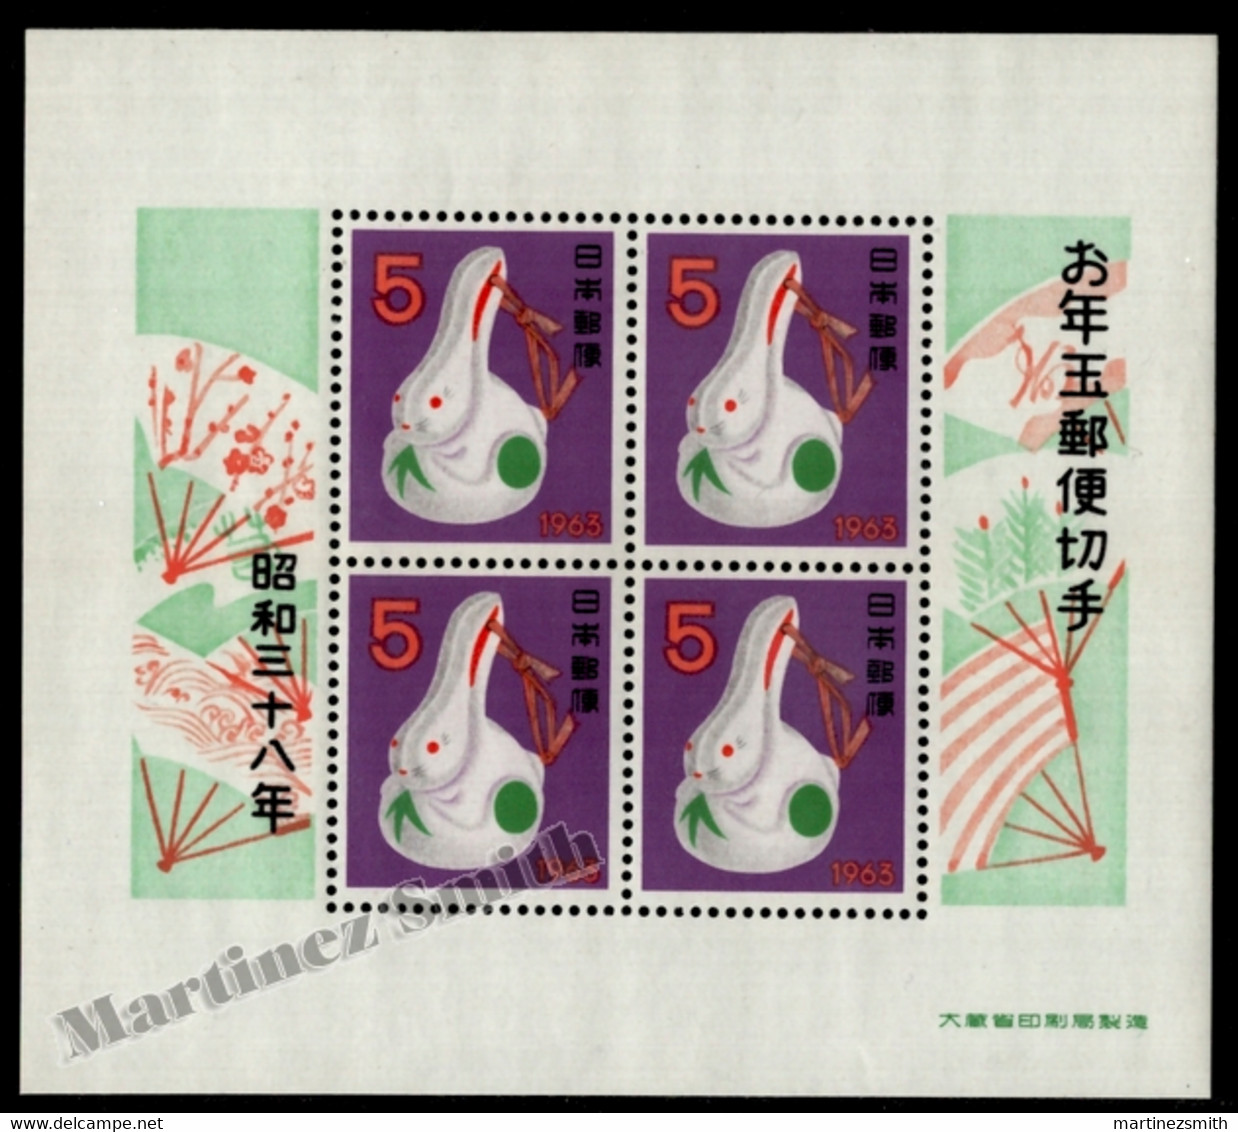 Japon - Japan 1962 Yvert BF 52, New Year, Lunar Year Of The Rabbit - Miniature Sheet - MNH - Blocks & Sheetlets